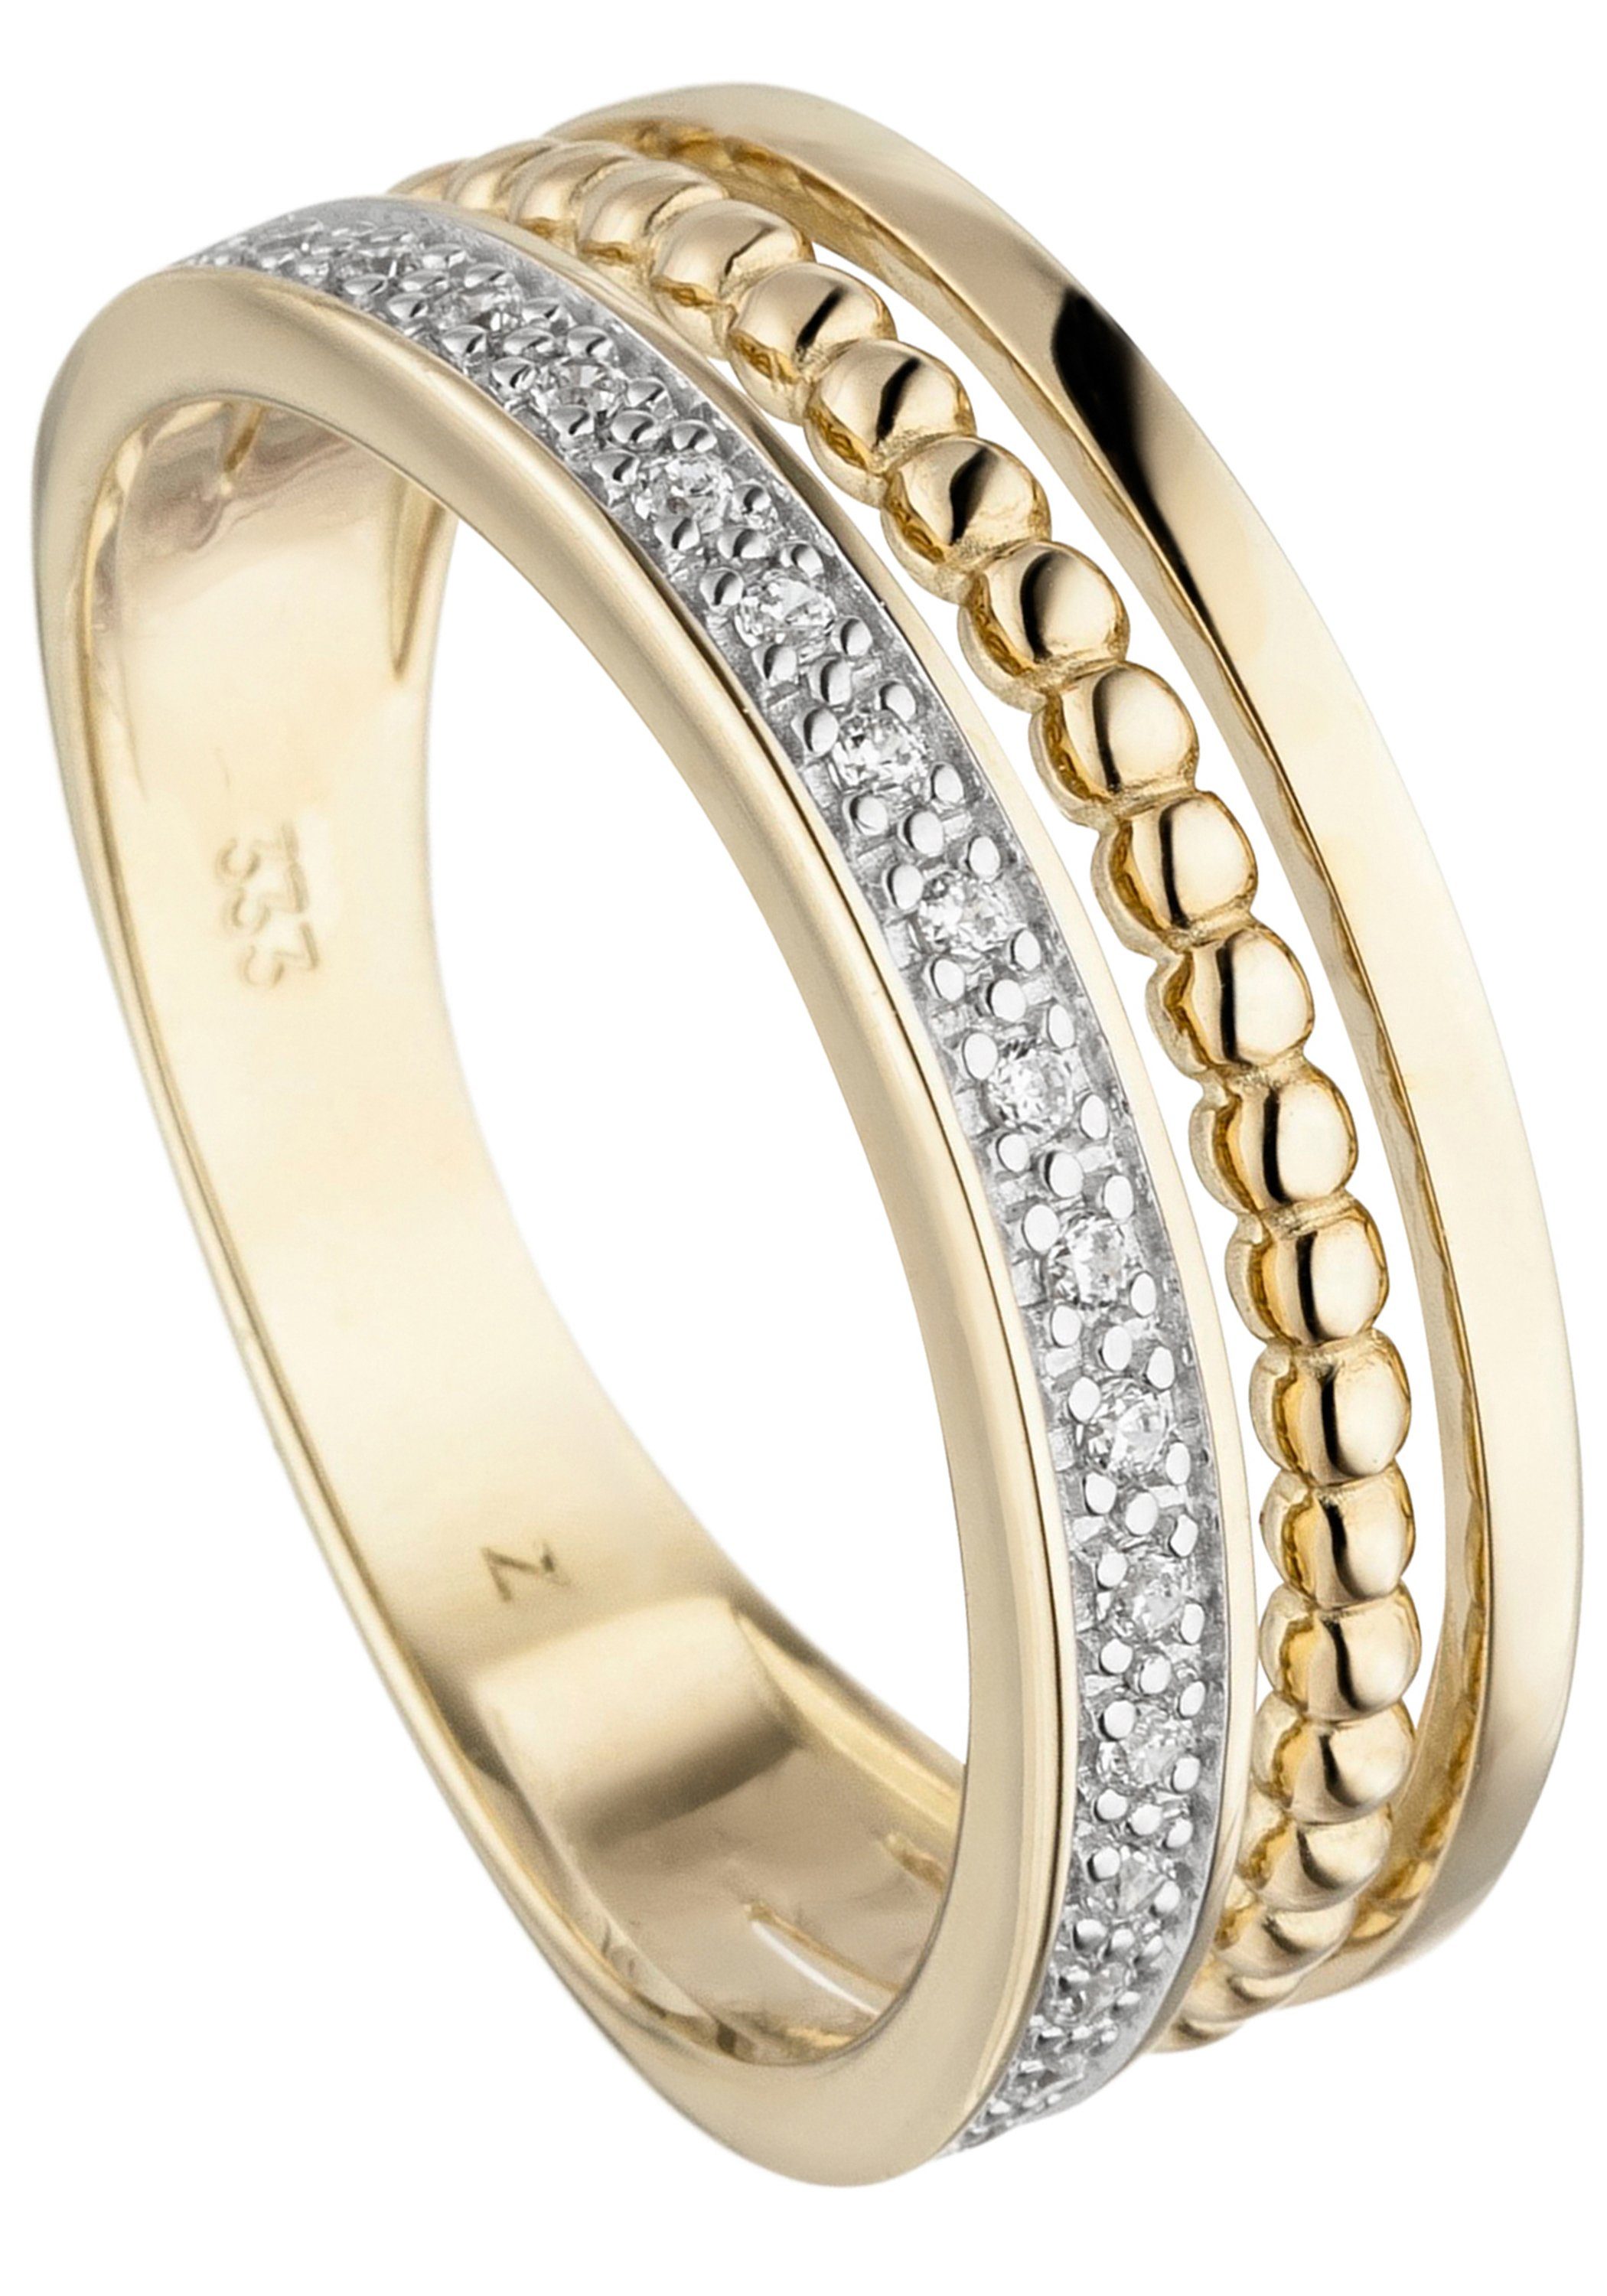 JOBO Fingerring Ring mit 17 Zirkonia, 333 Gold bicolor